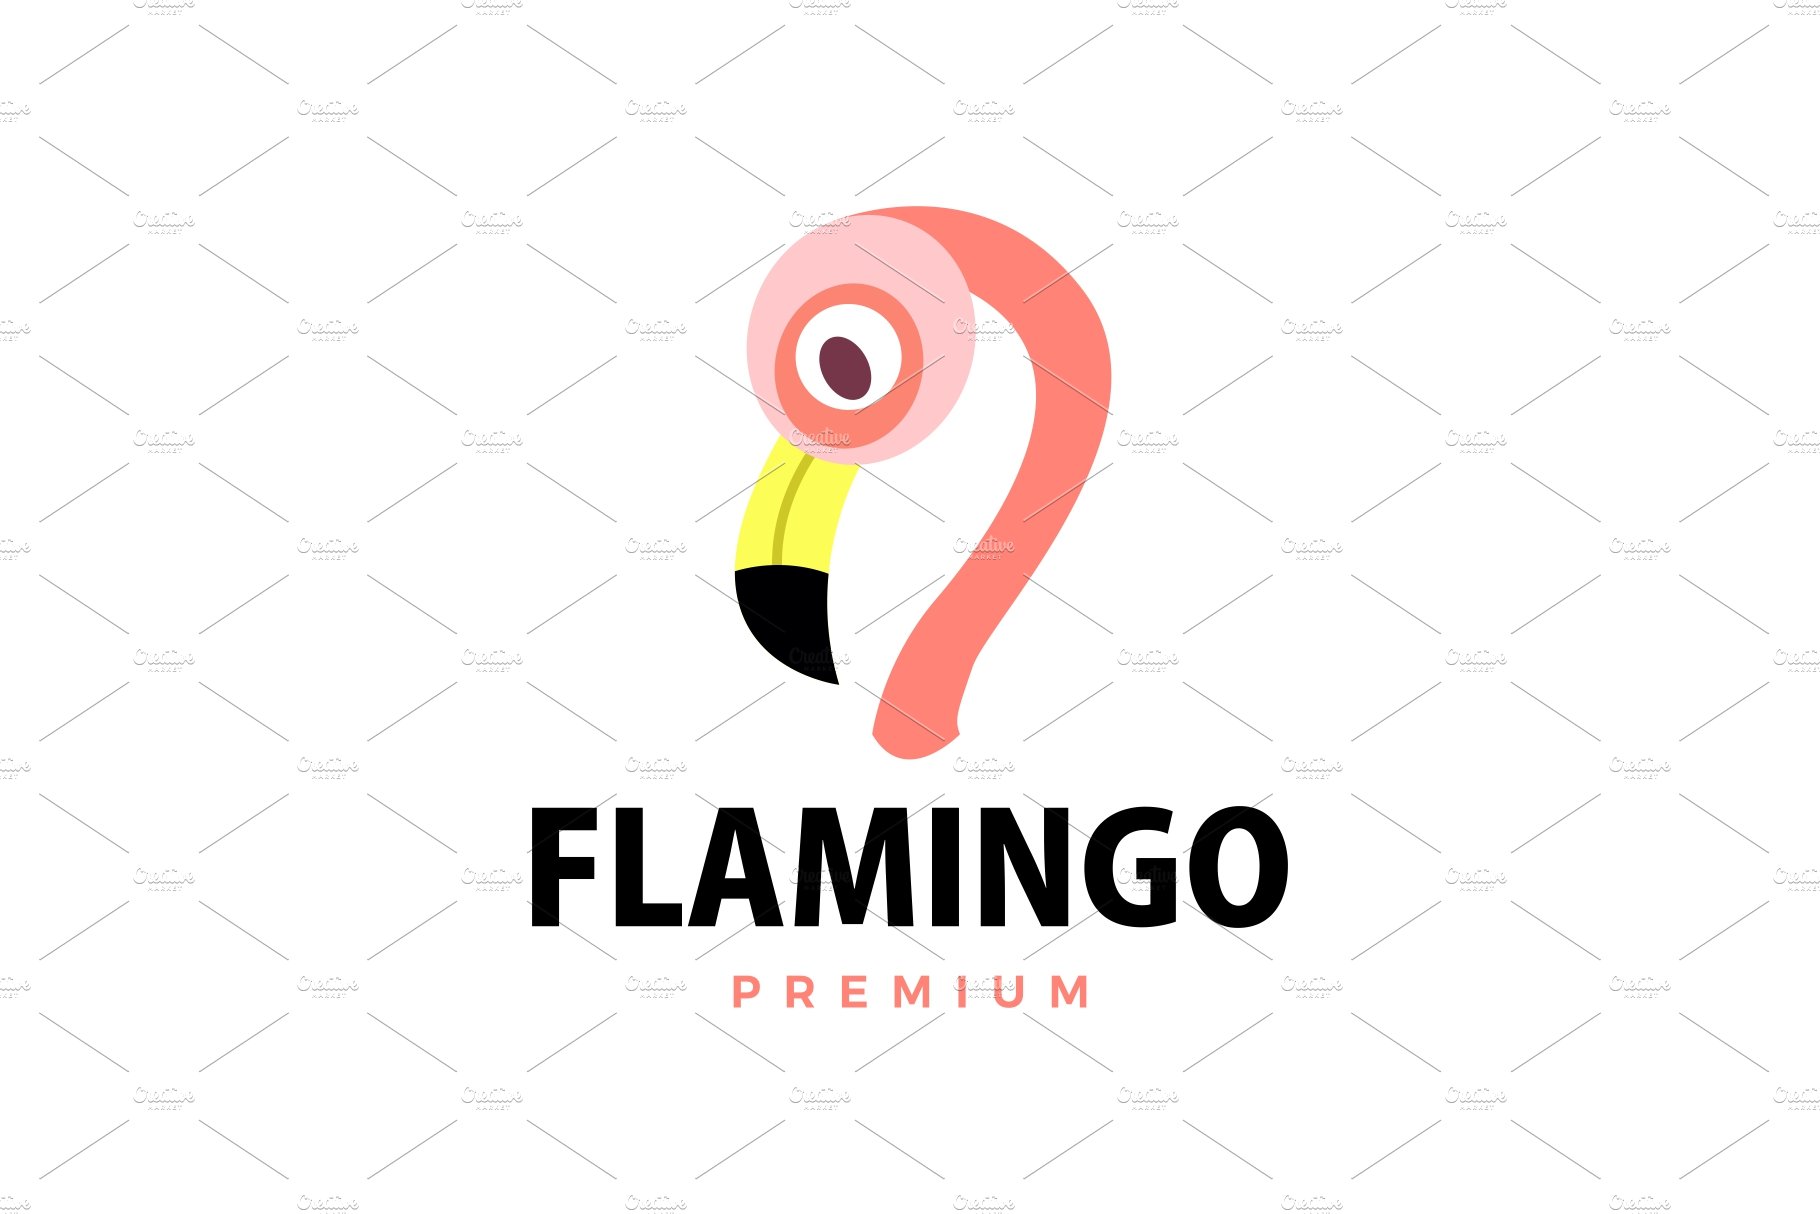 flamingo flat logo vector icon cover image.